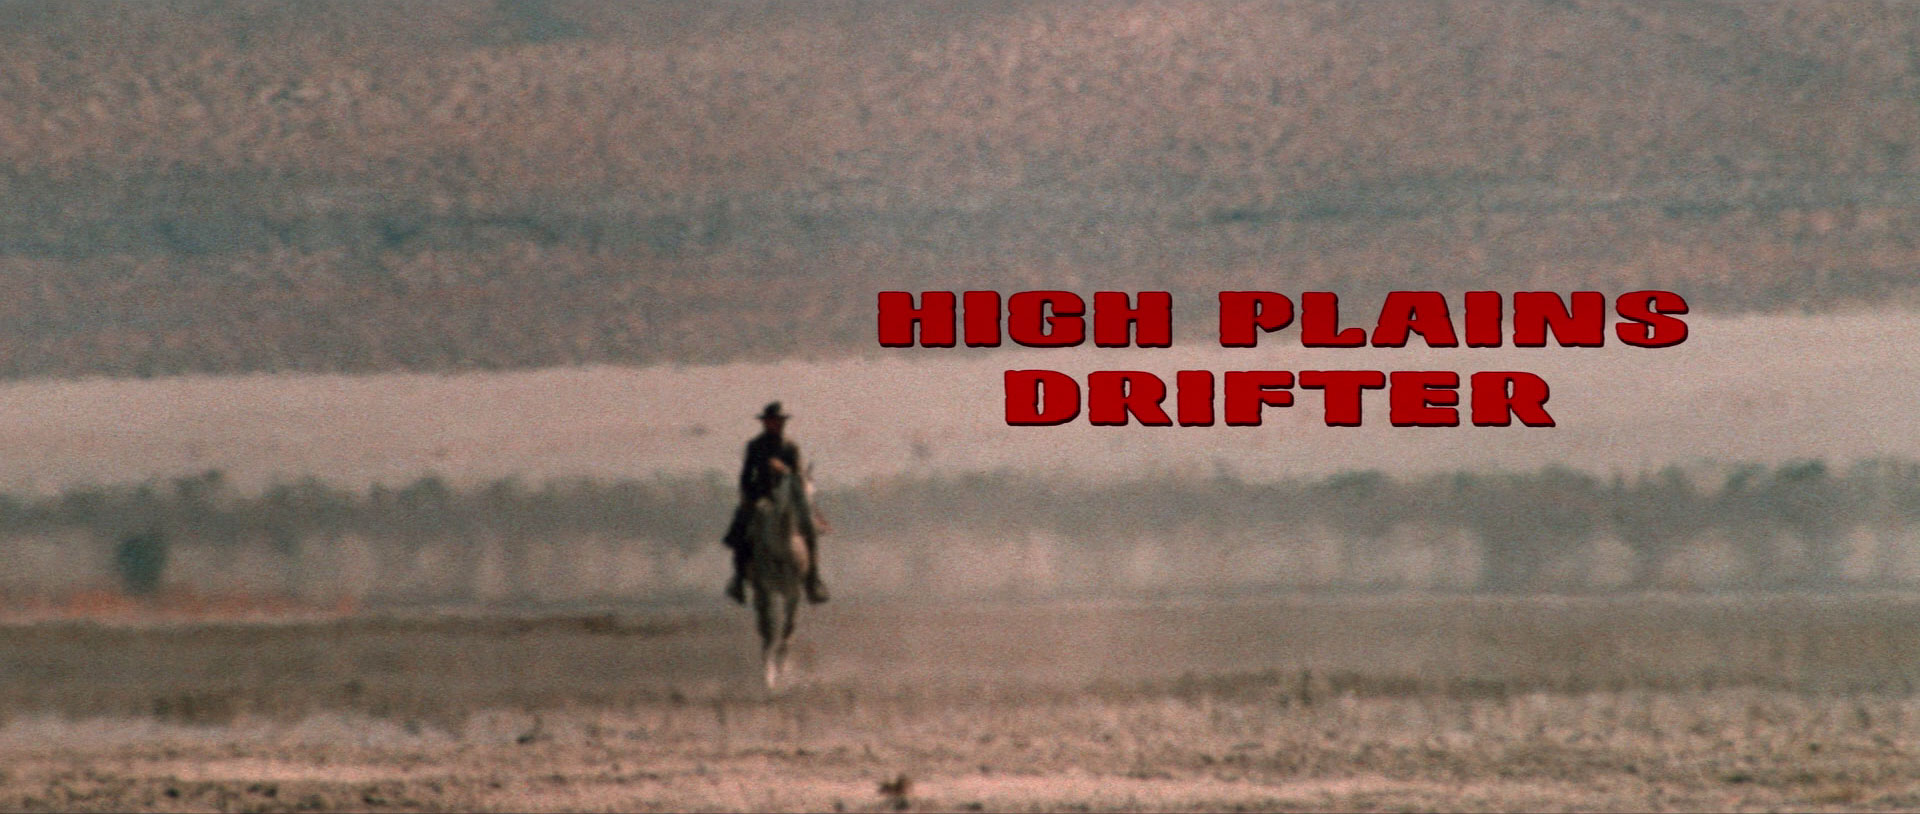 Movie High Plains Drifter HD Wallpaper | Background Image